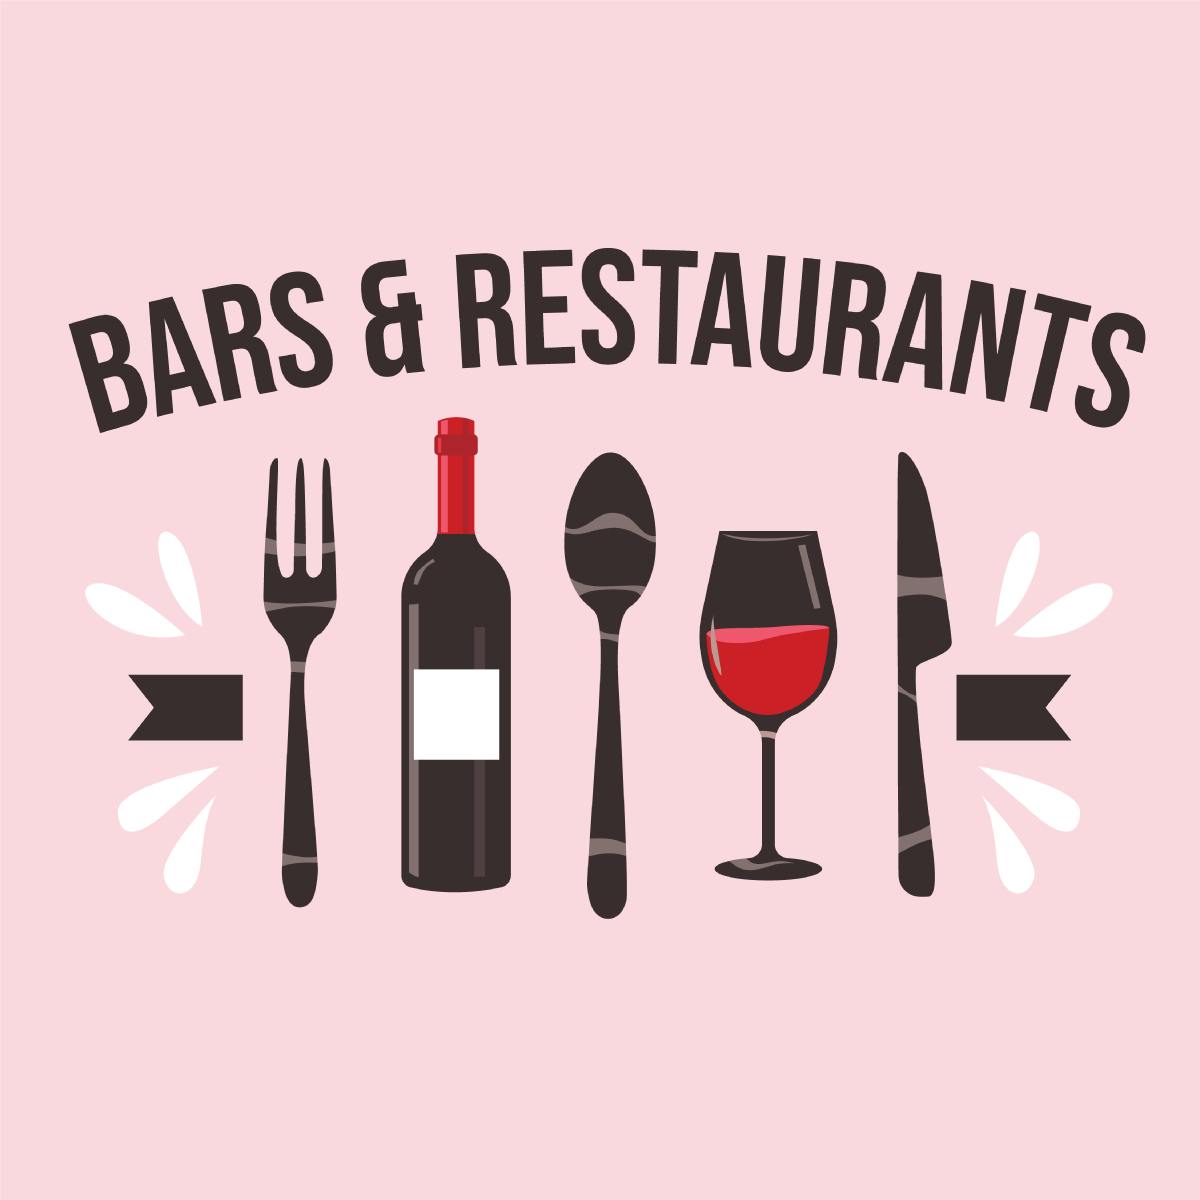 Bar & Restaurant